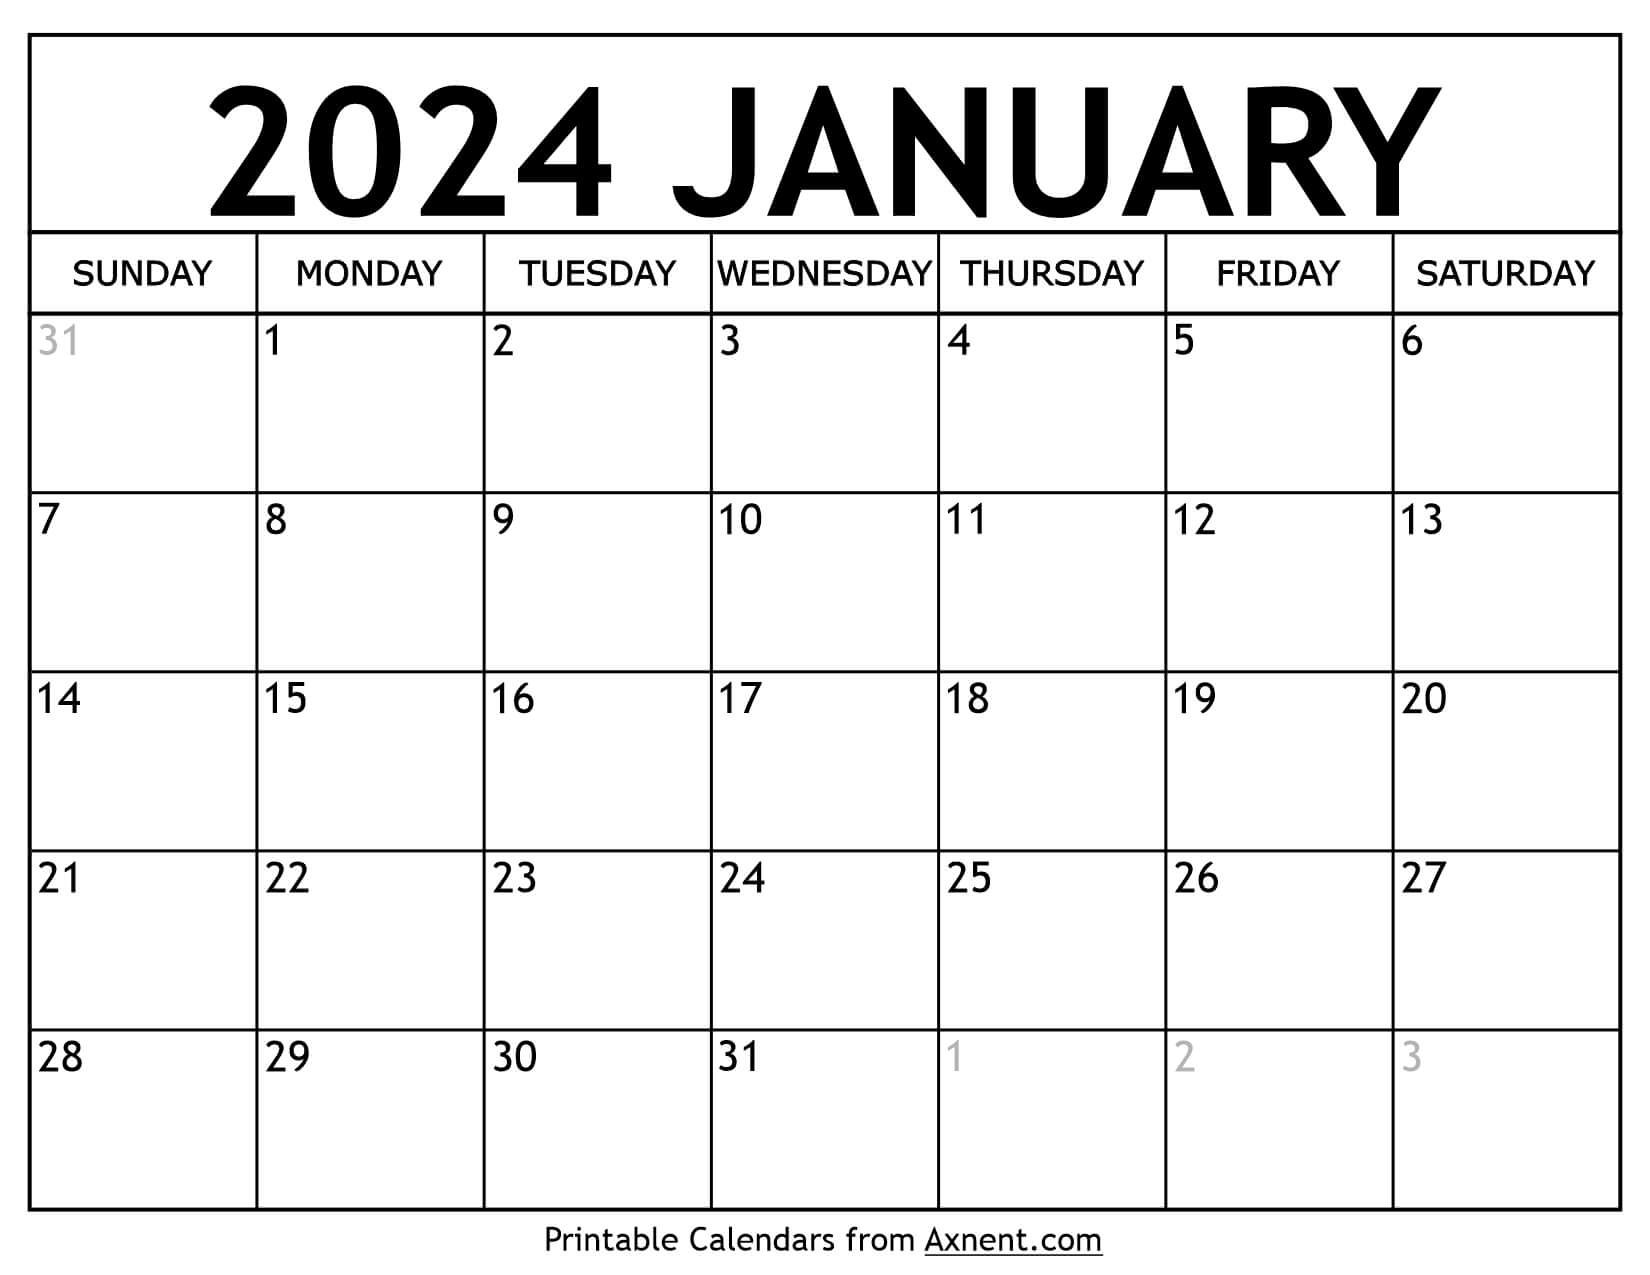 Printable January 2024 Calendar Template - Print Now for 2024 Calendar January Printable